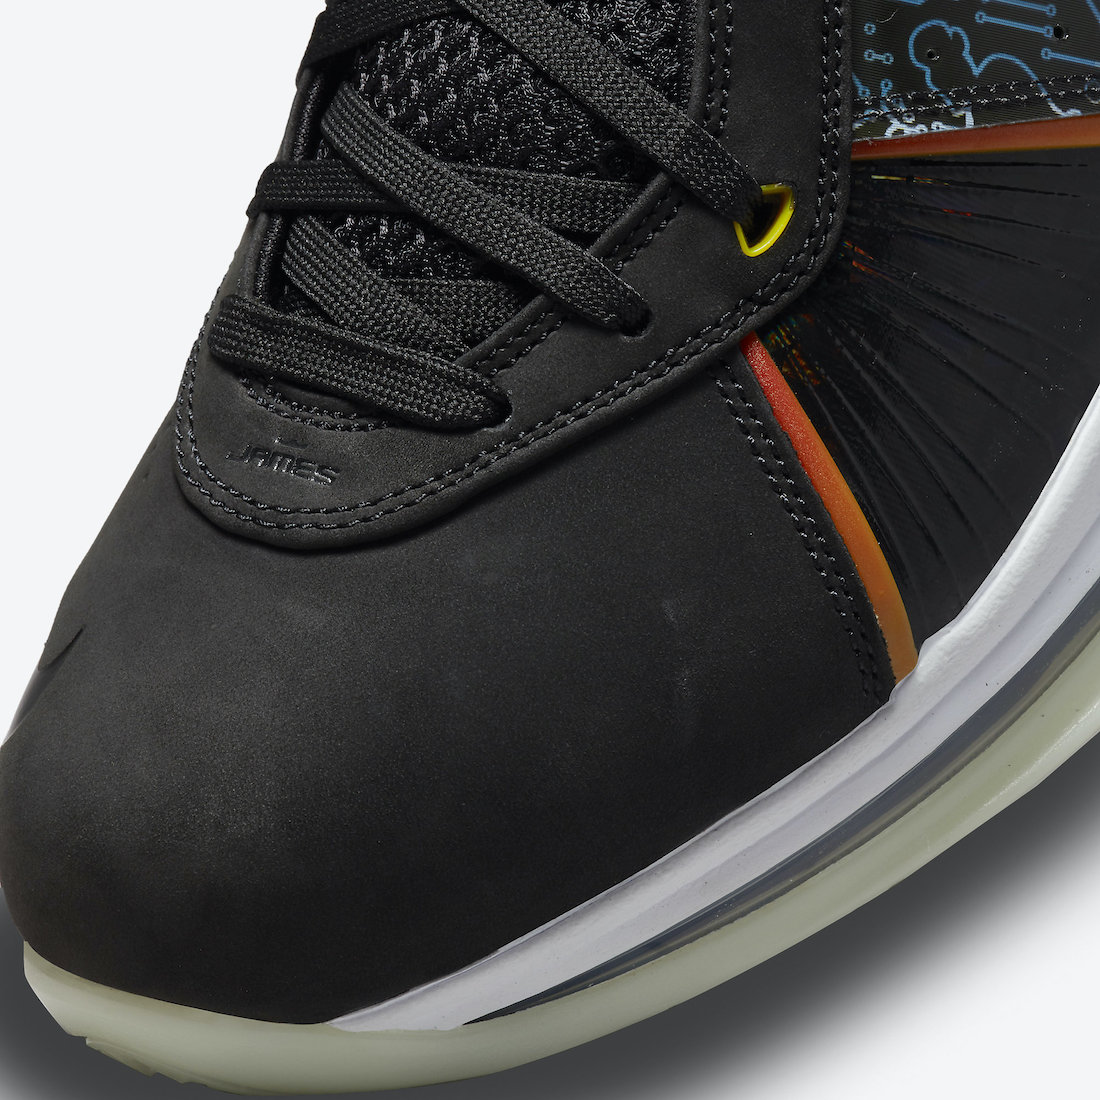 Nike-LeBron-8-Space-Jam-DB1732-001-Release-Date-6-1